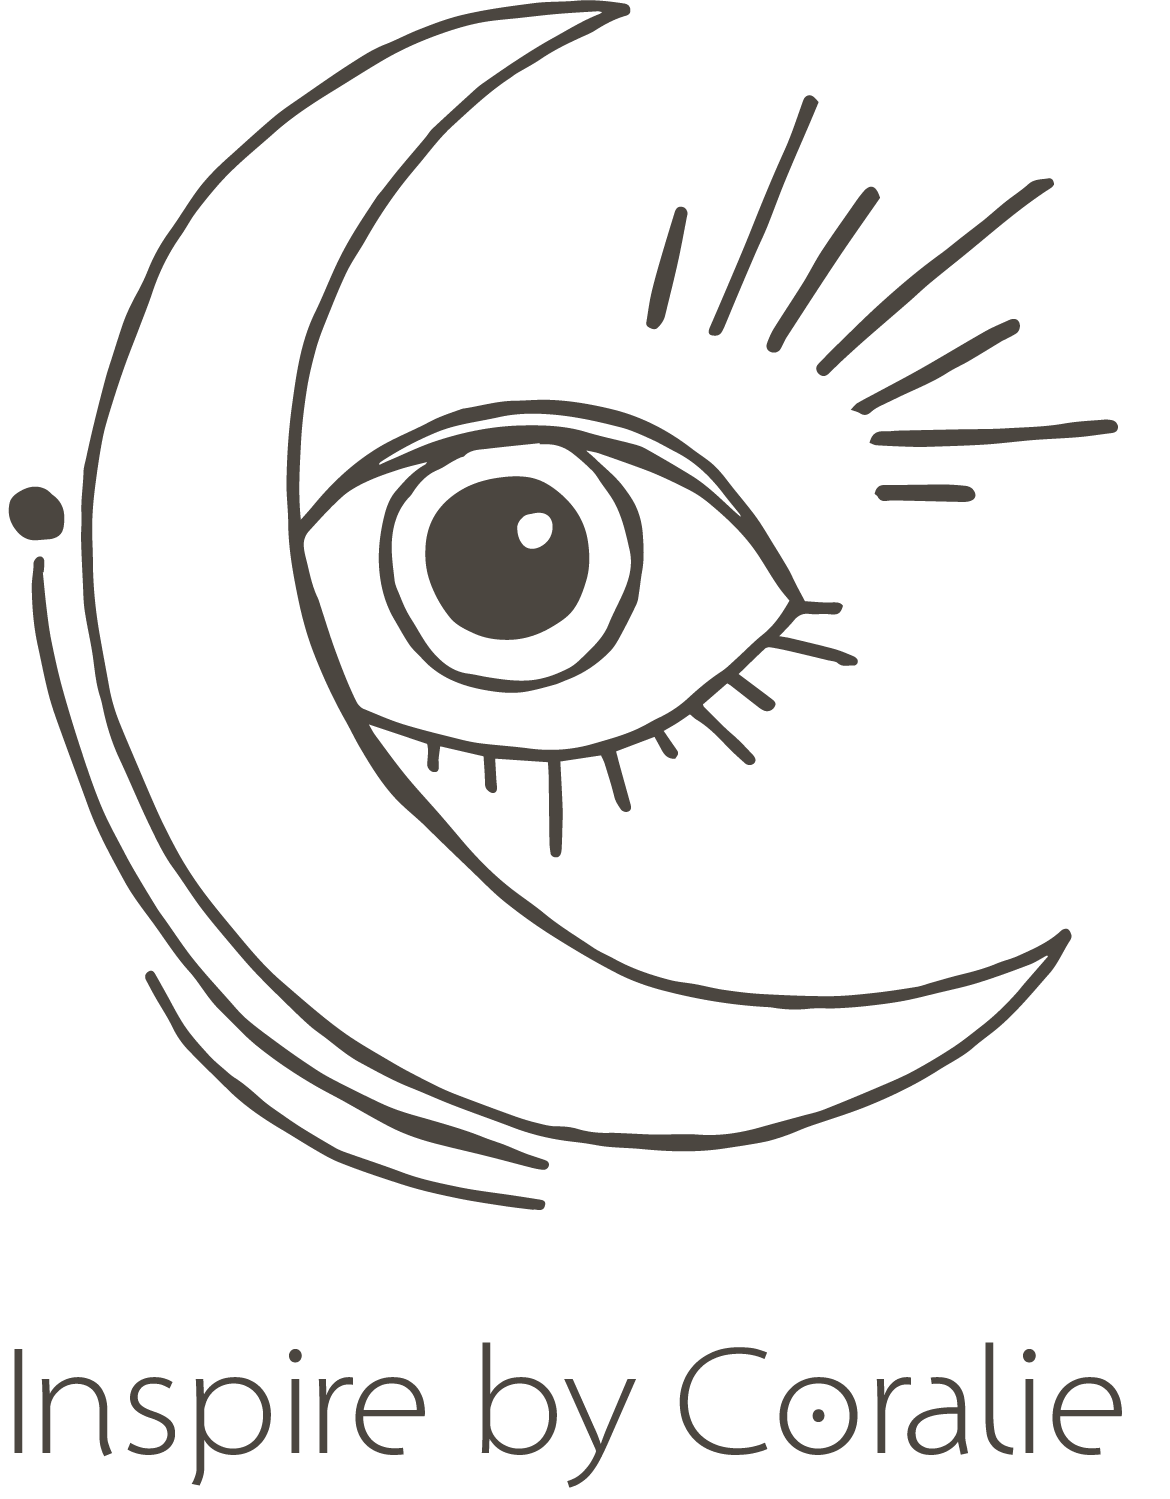 accueil - logo noir & blanc inspire by coralie